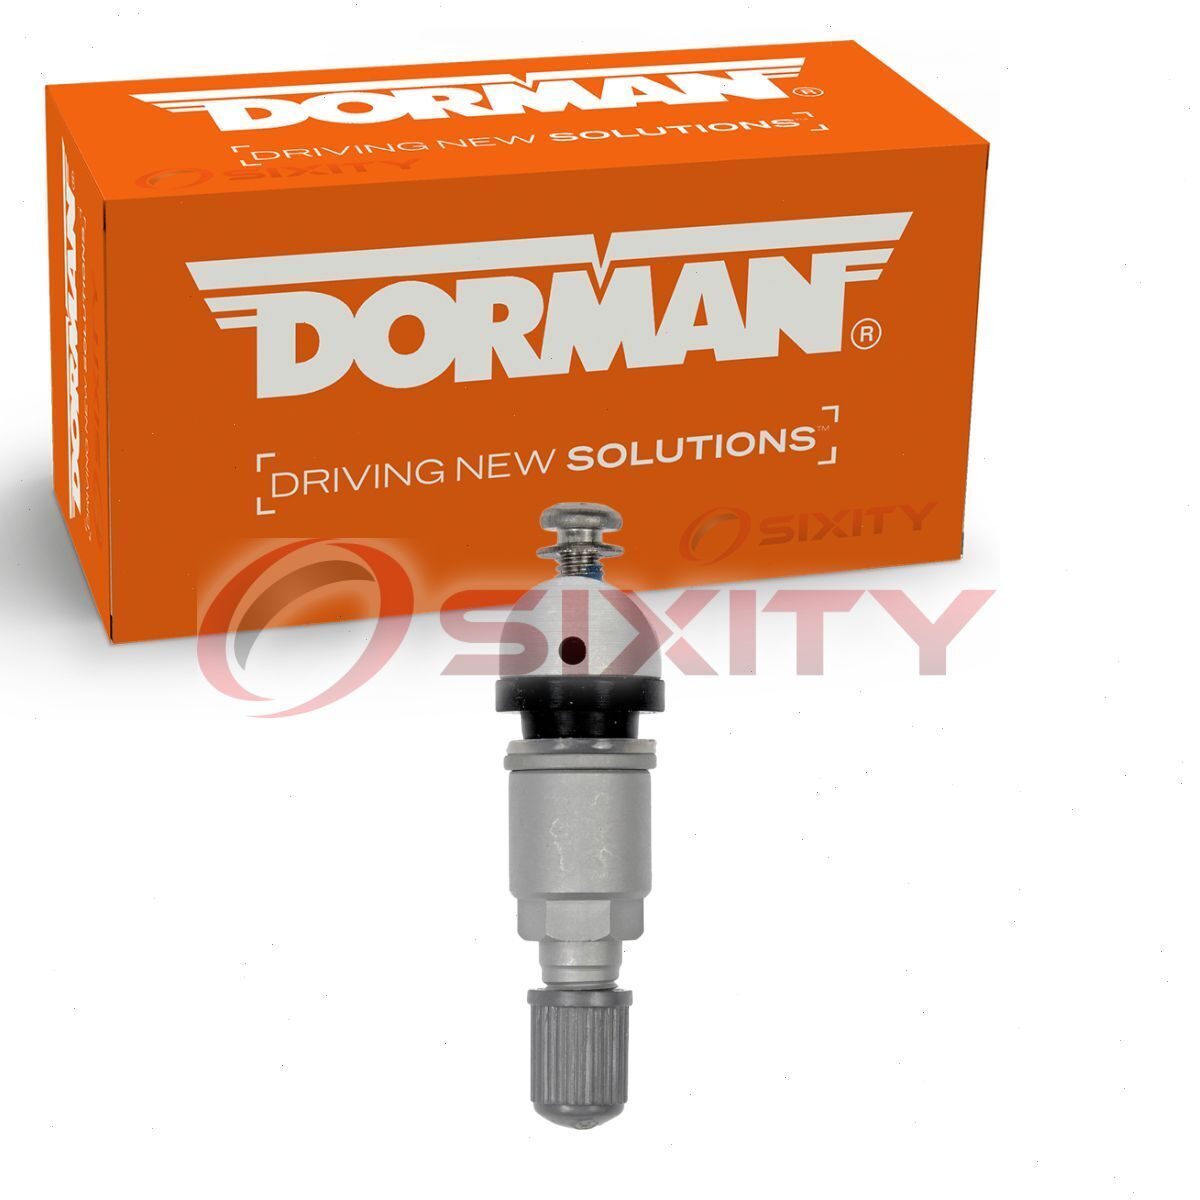 Dorman TPMS Valve Kit for 1999 BMW 323is Tire Pressure Monitoring System  bo